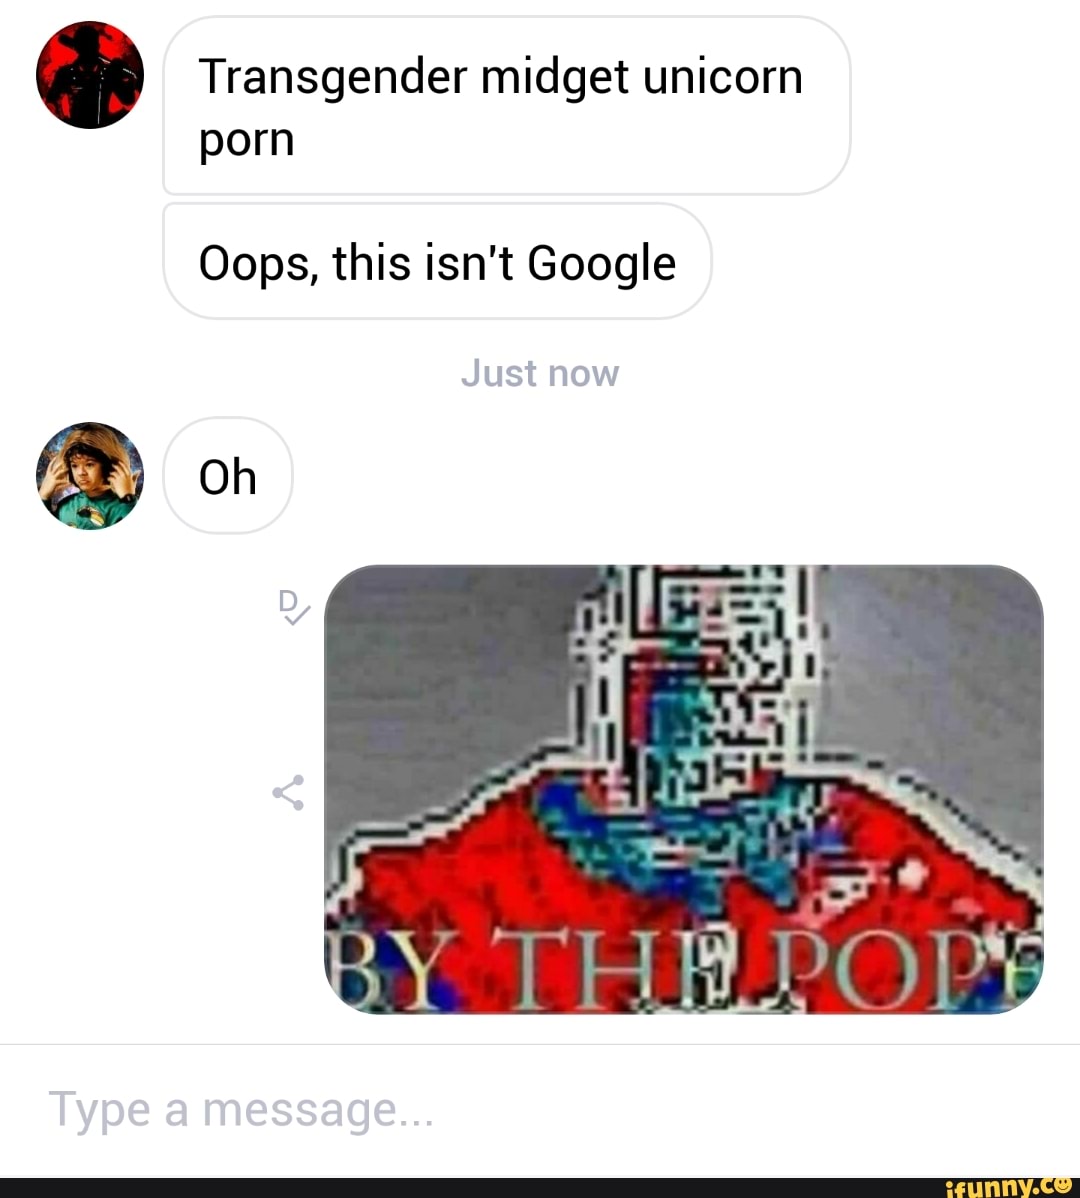 Midget Transgender Porn - Transgender midget unicorn porn Oops, this isn't Google Oh ...